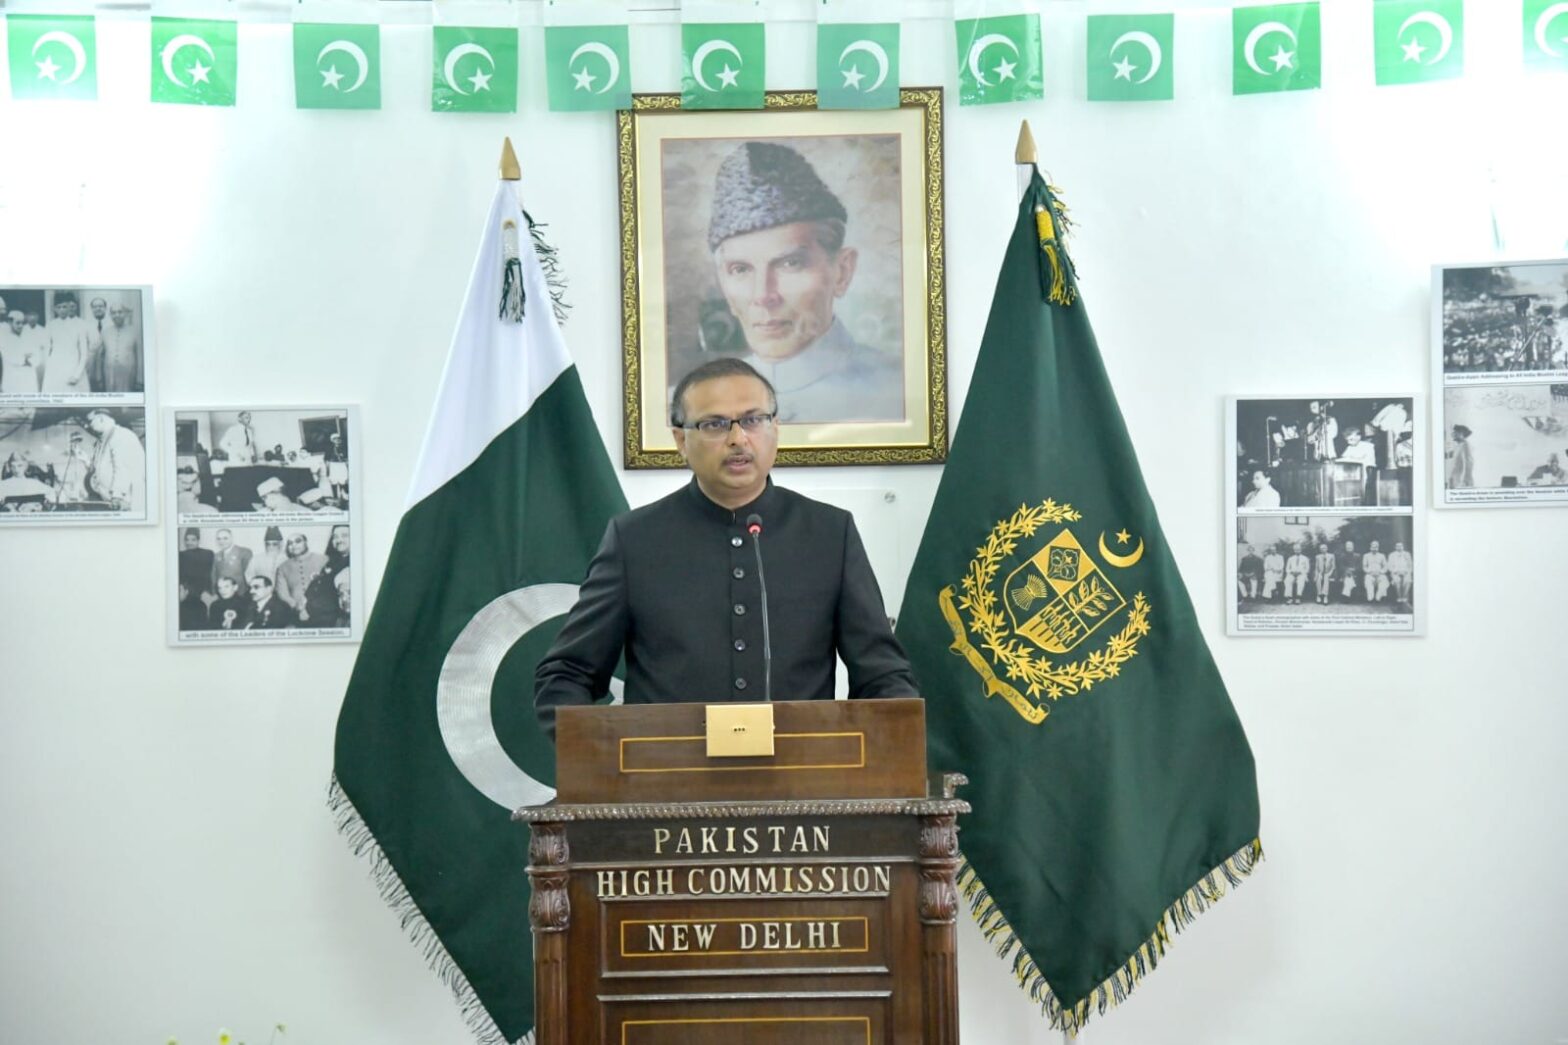 Pakistan High Commission in New Delhi holds flag-hoisting ceremony